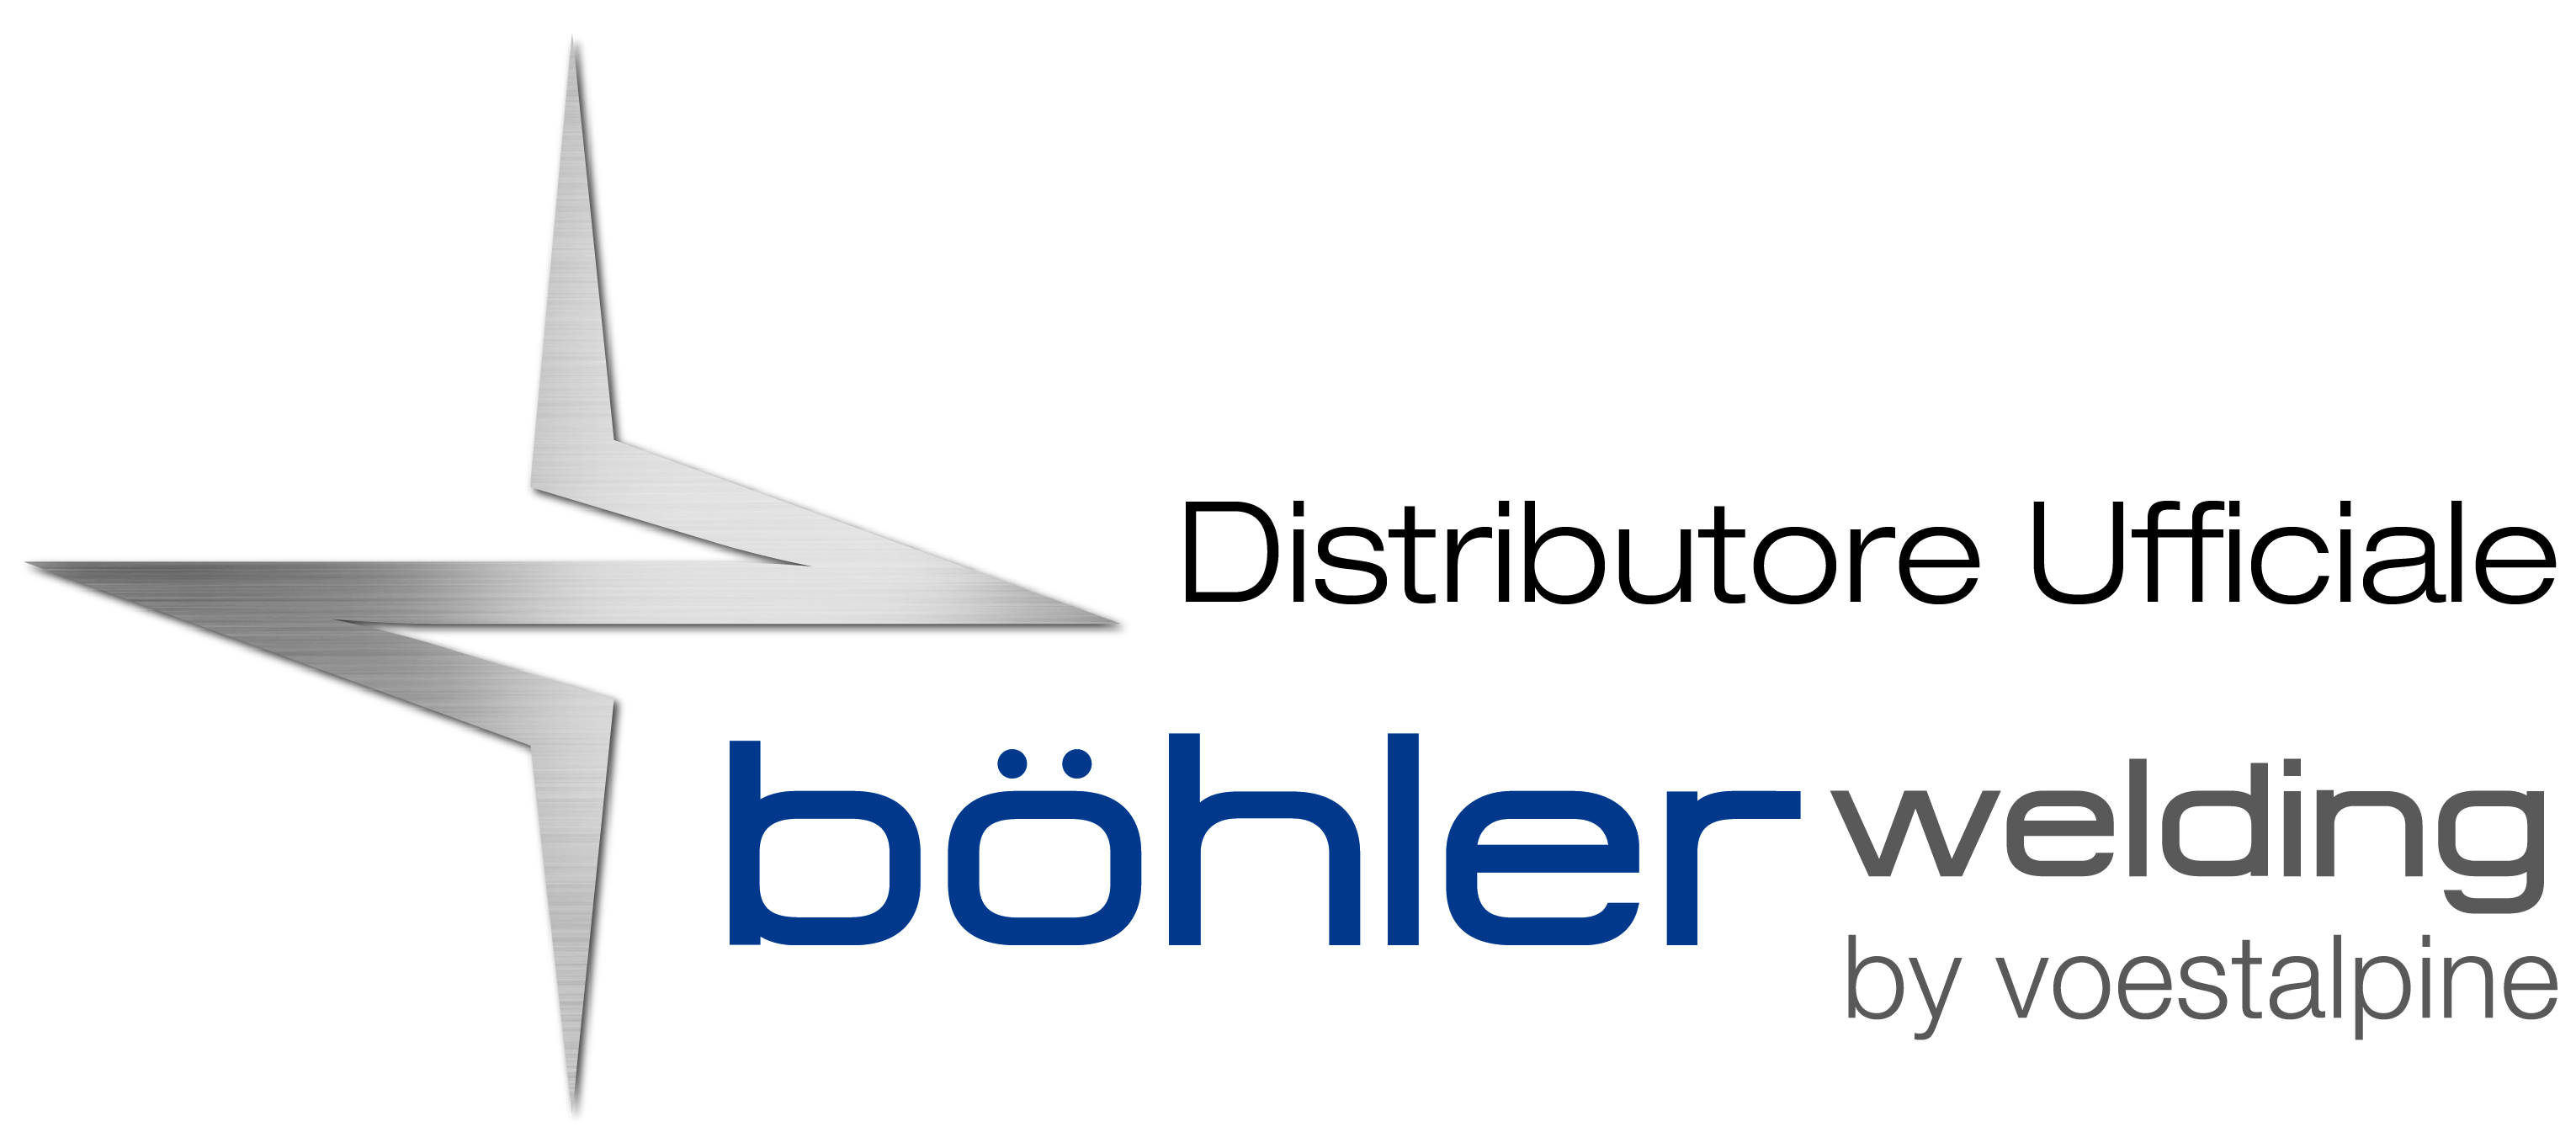 Category-Logo-Boehler_OfficialDistributor_IT